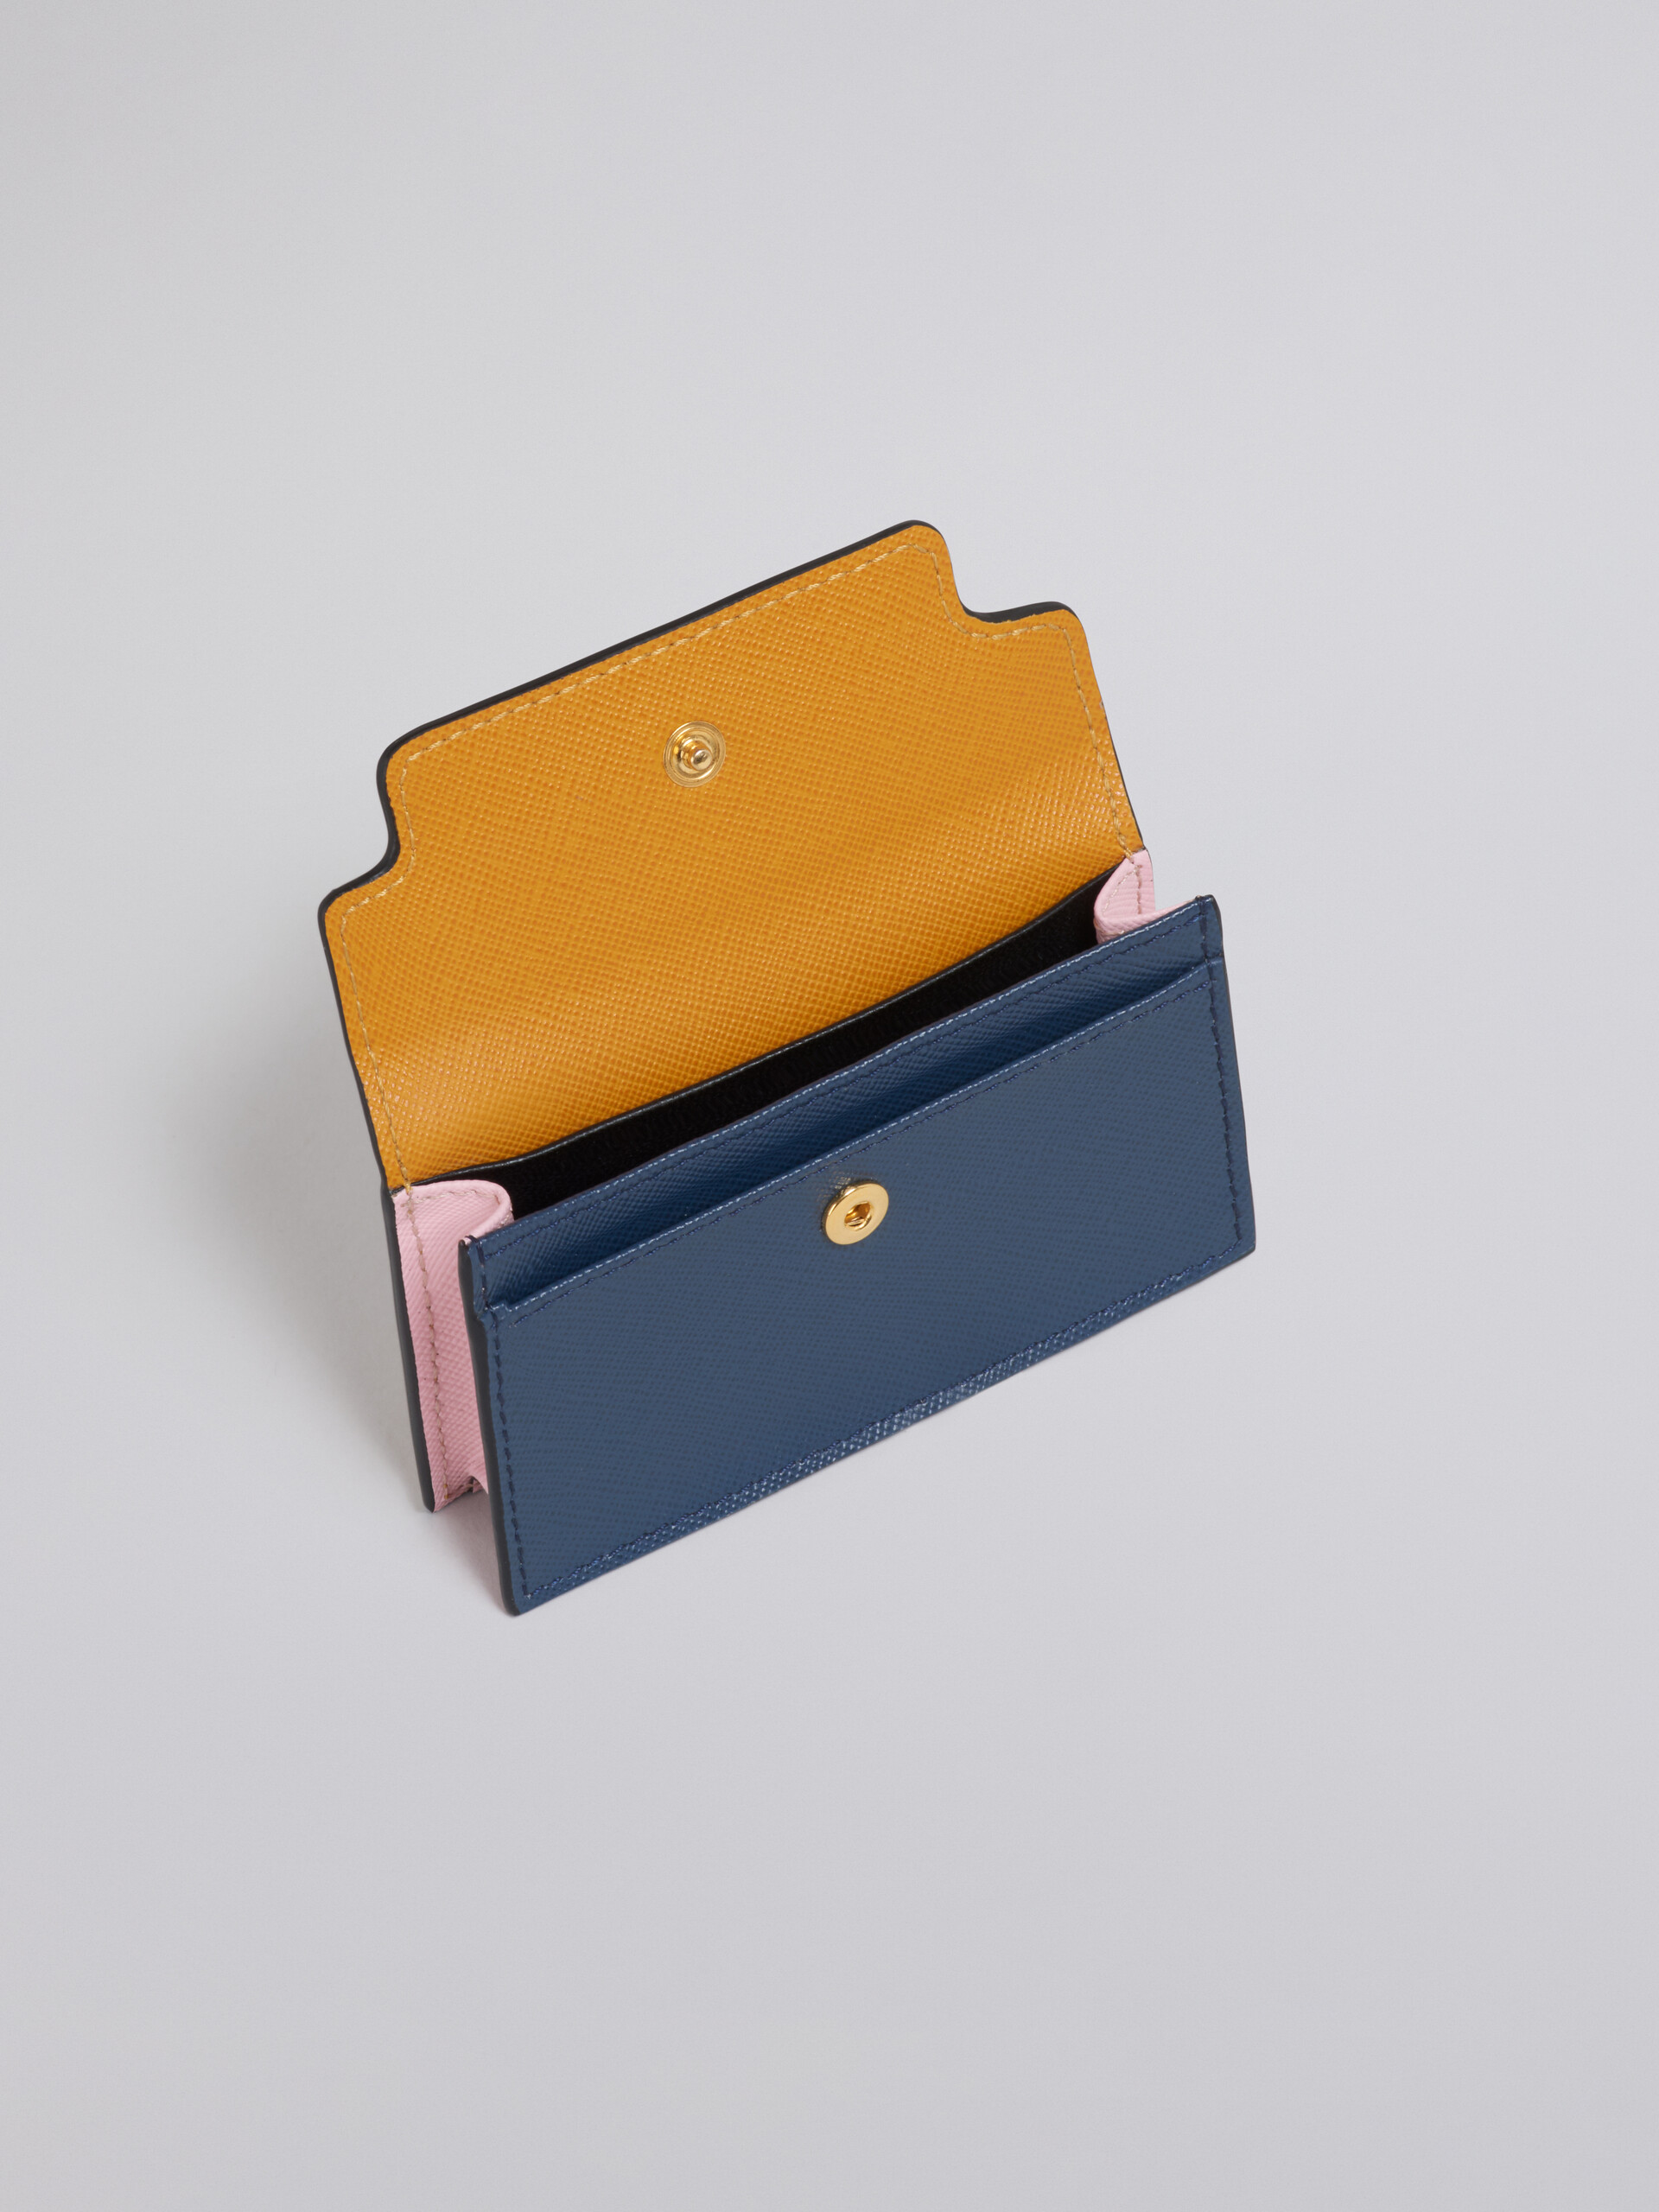 Business card holder in orange pink and blue saffiano calfskin - Wallets - Image 2